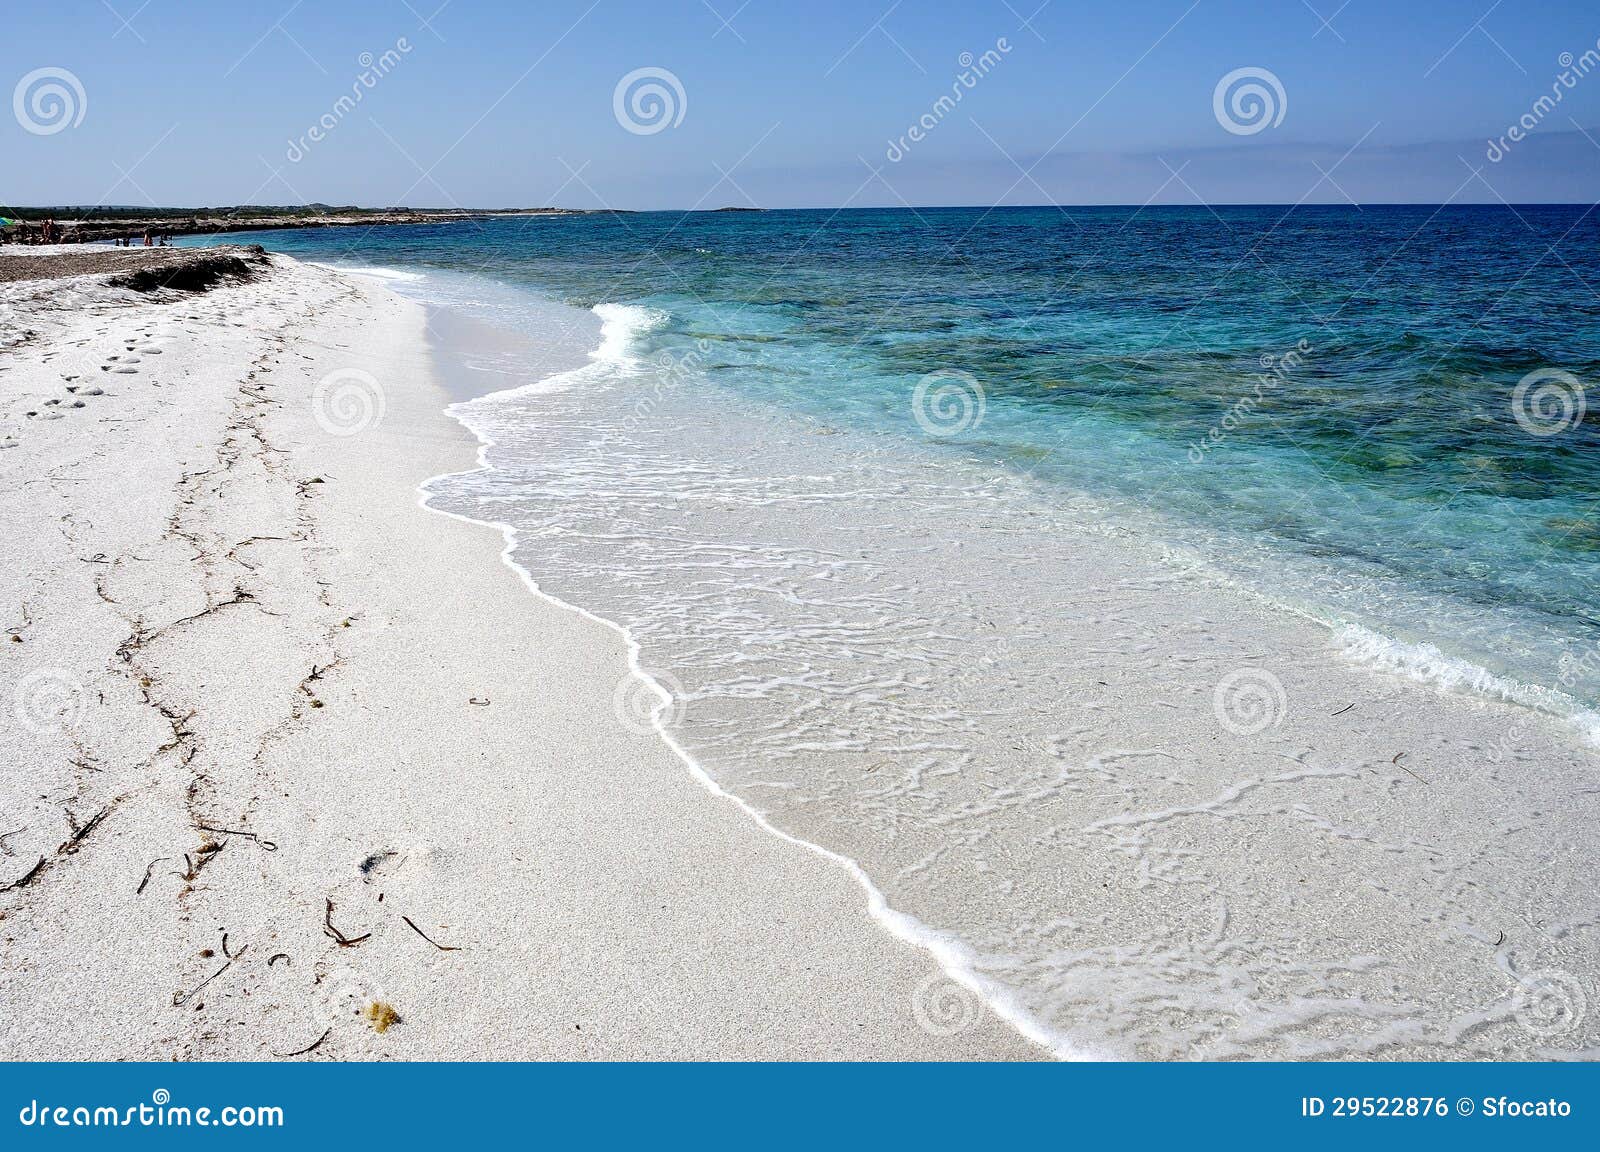 view of mari ermi beach, sardinia, italy